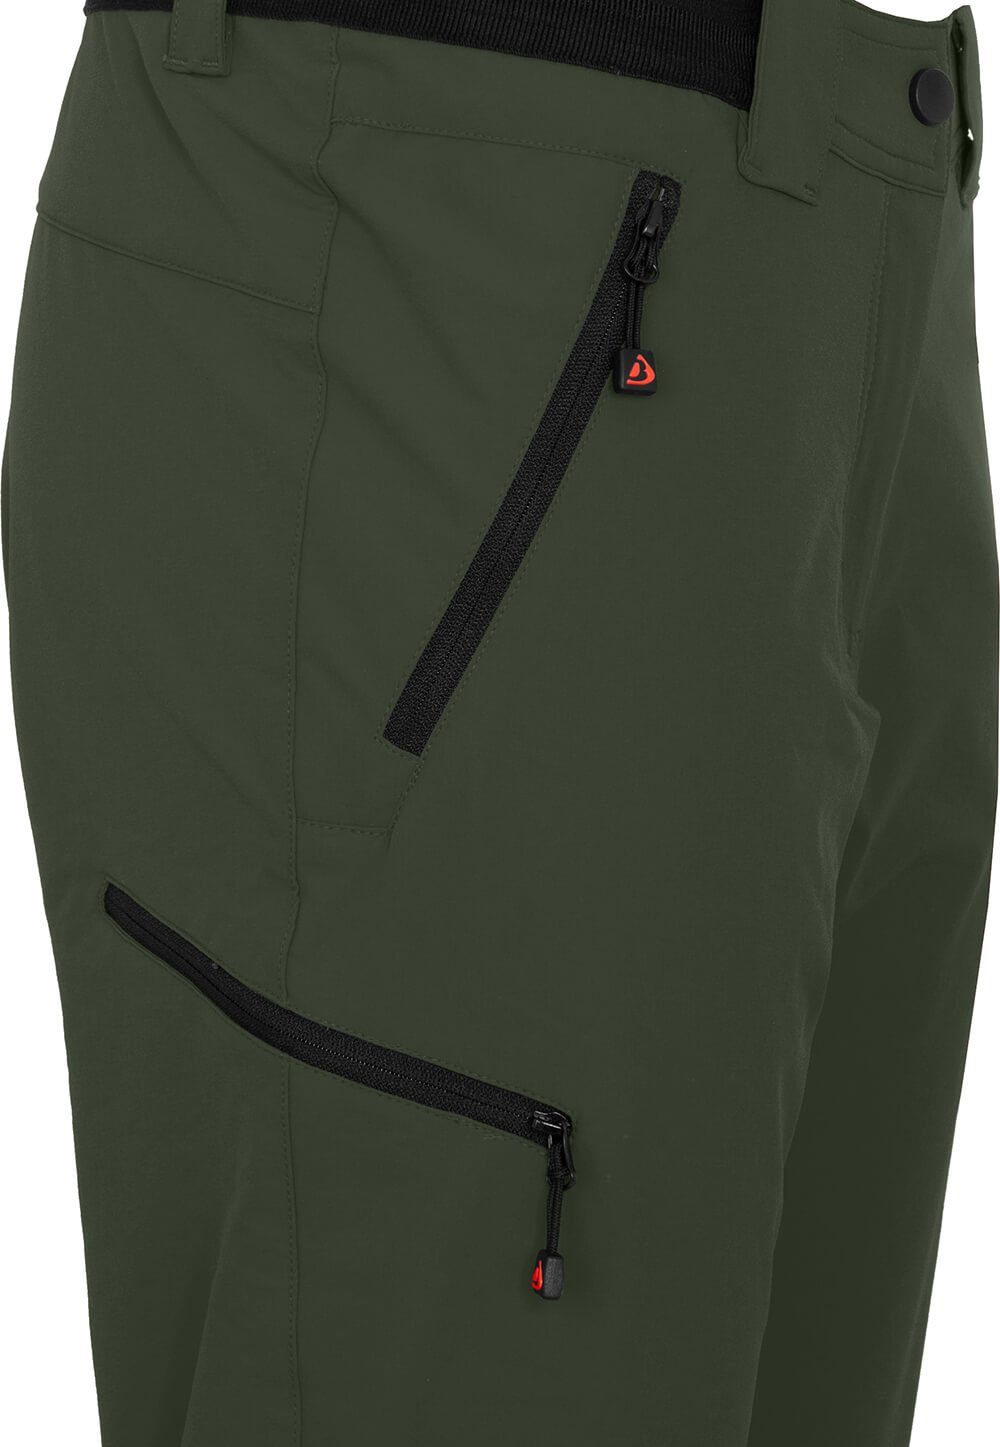 Bergson Outdoorhose VIDAA COMFORT (slim) dunkel Normalgrößen, Damen grün Wanderhose, leicht, strapazierfähig